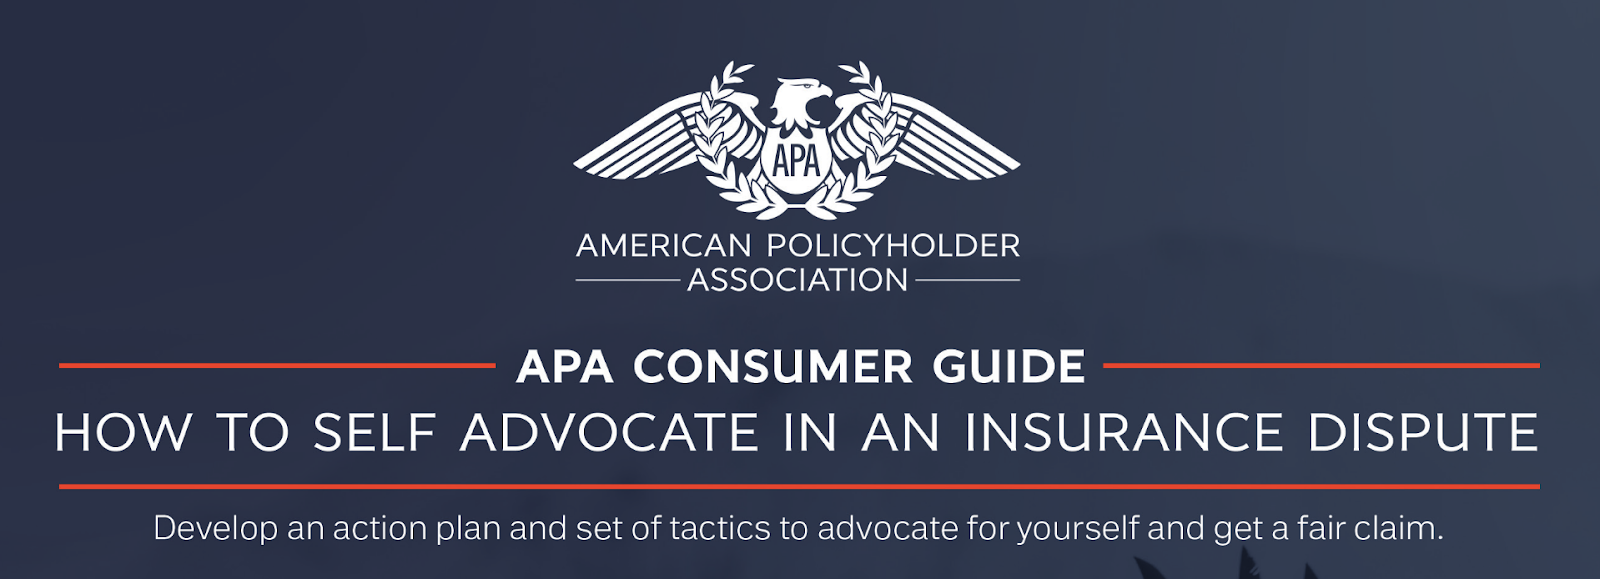 APA Consumer Guide Banner